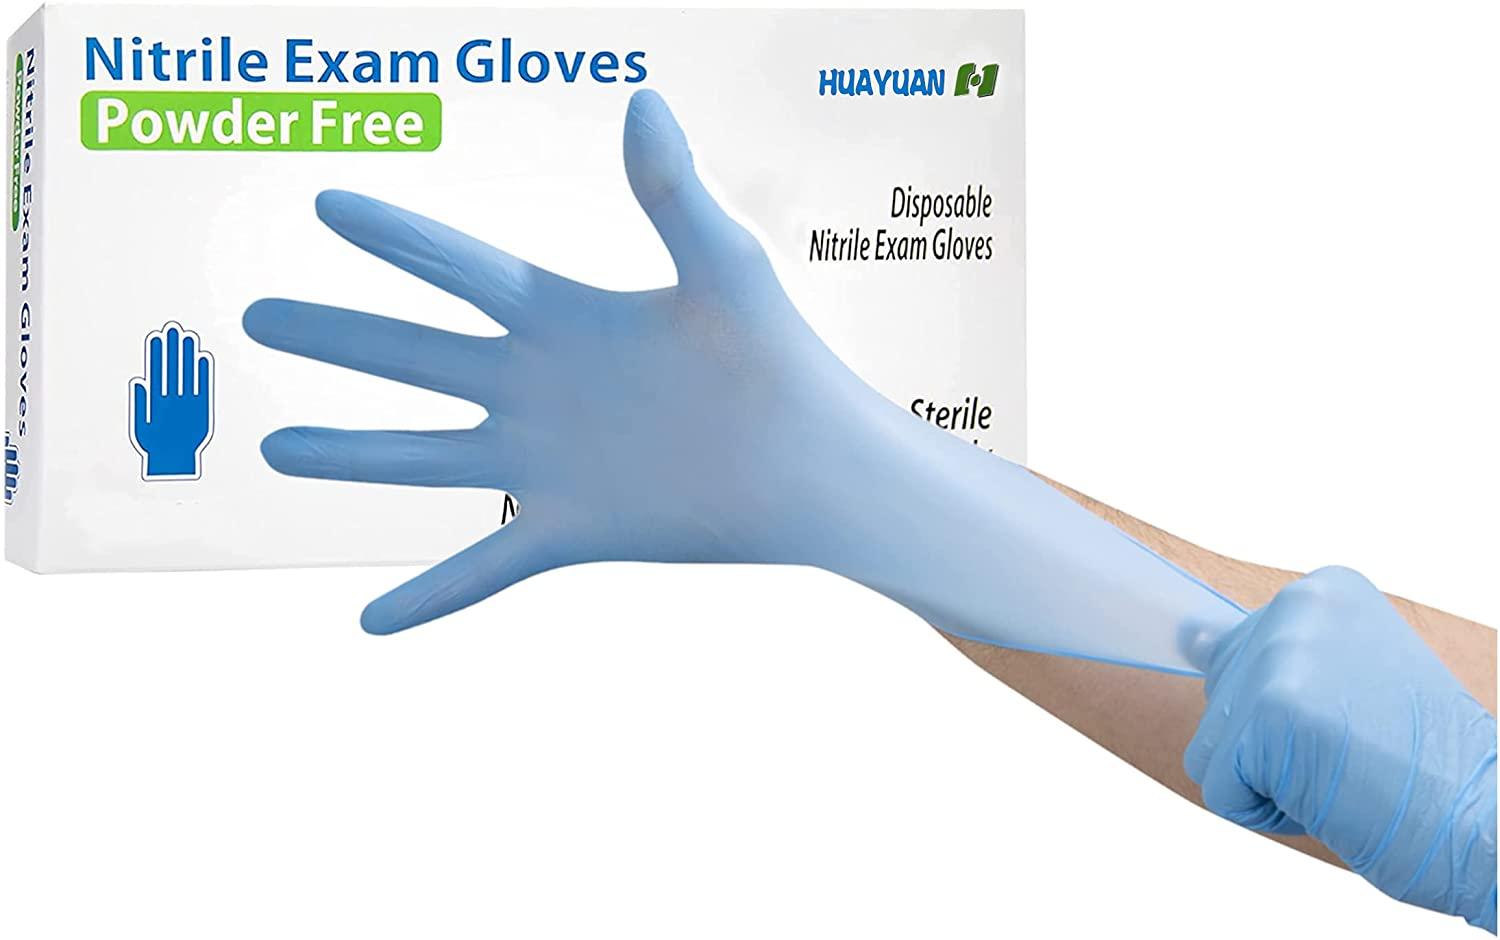 100 4mil Powder-Free Nitrile Disposable Exam Gloves for $5.80